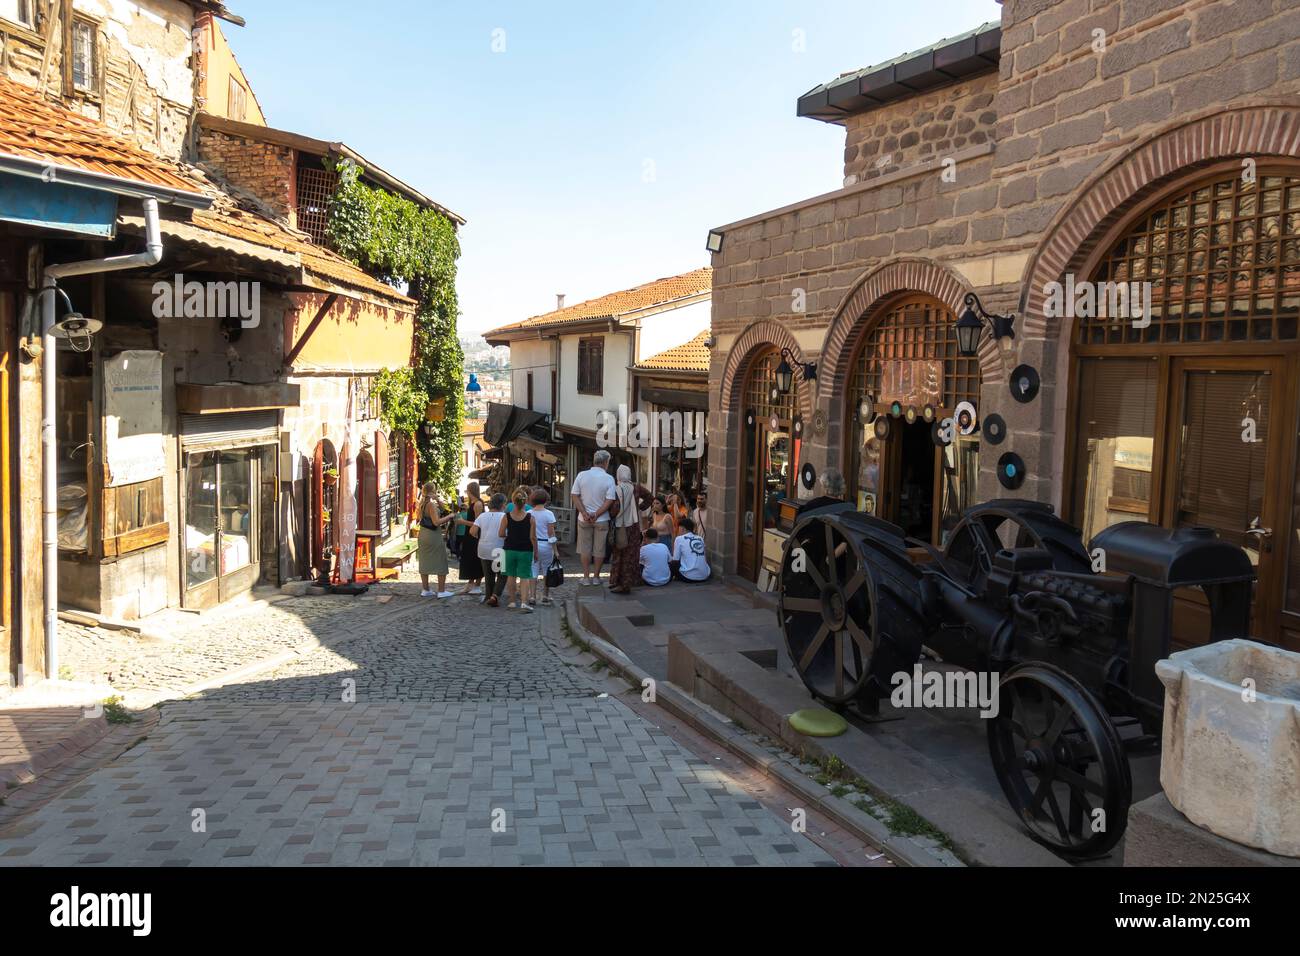 Tourism Ankara. Historic central cobbled street with museums, cafes, markets, shops in Altındağ/Ankara Turkey Stock Photo